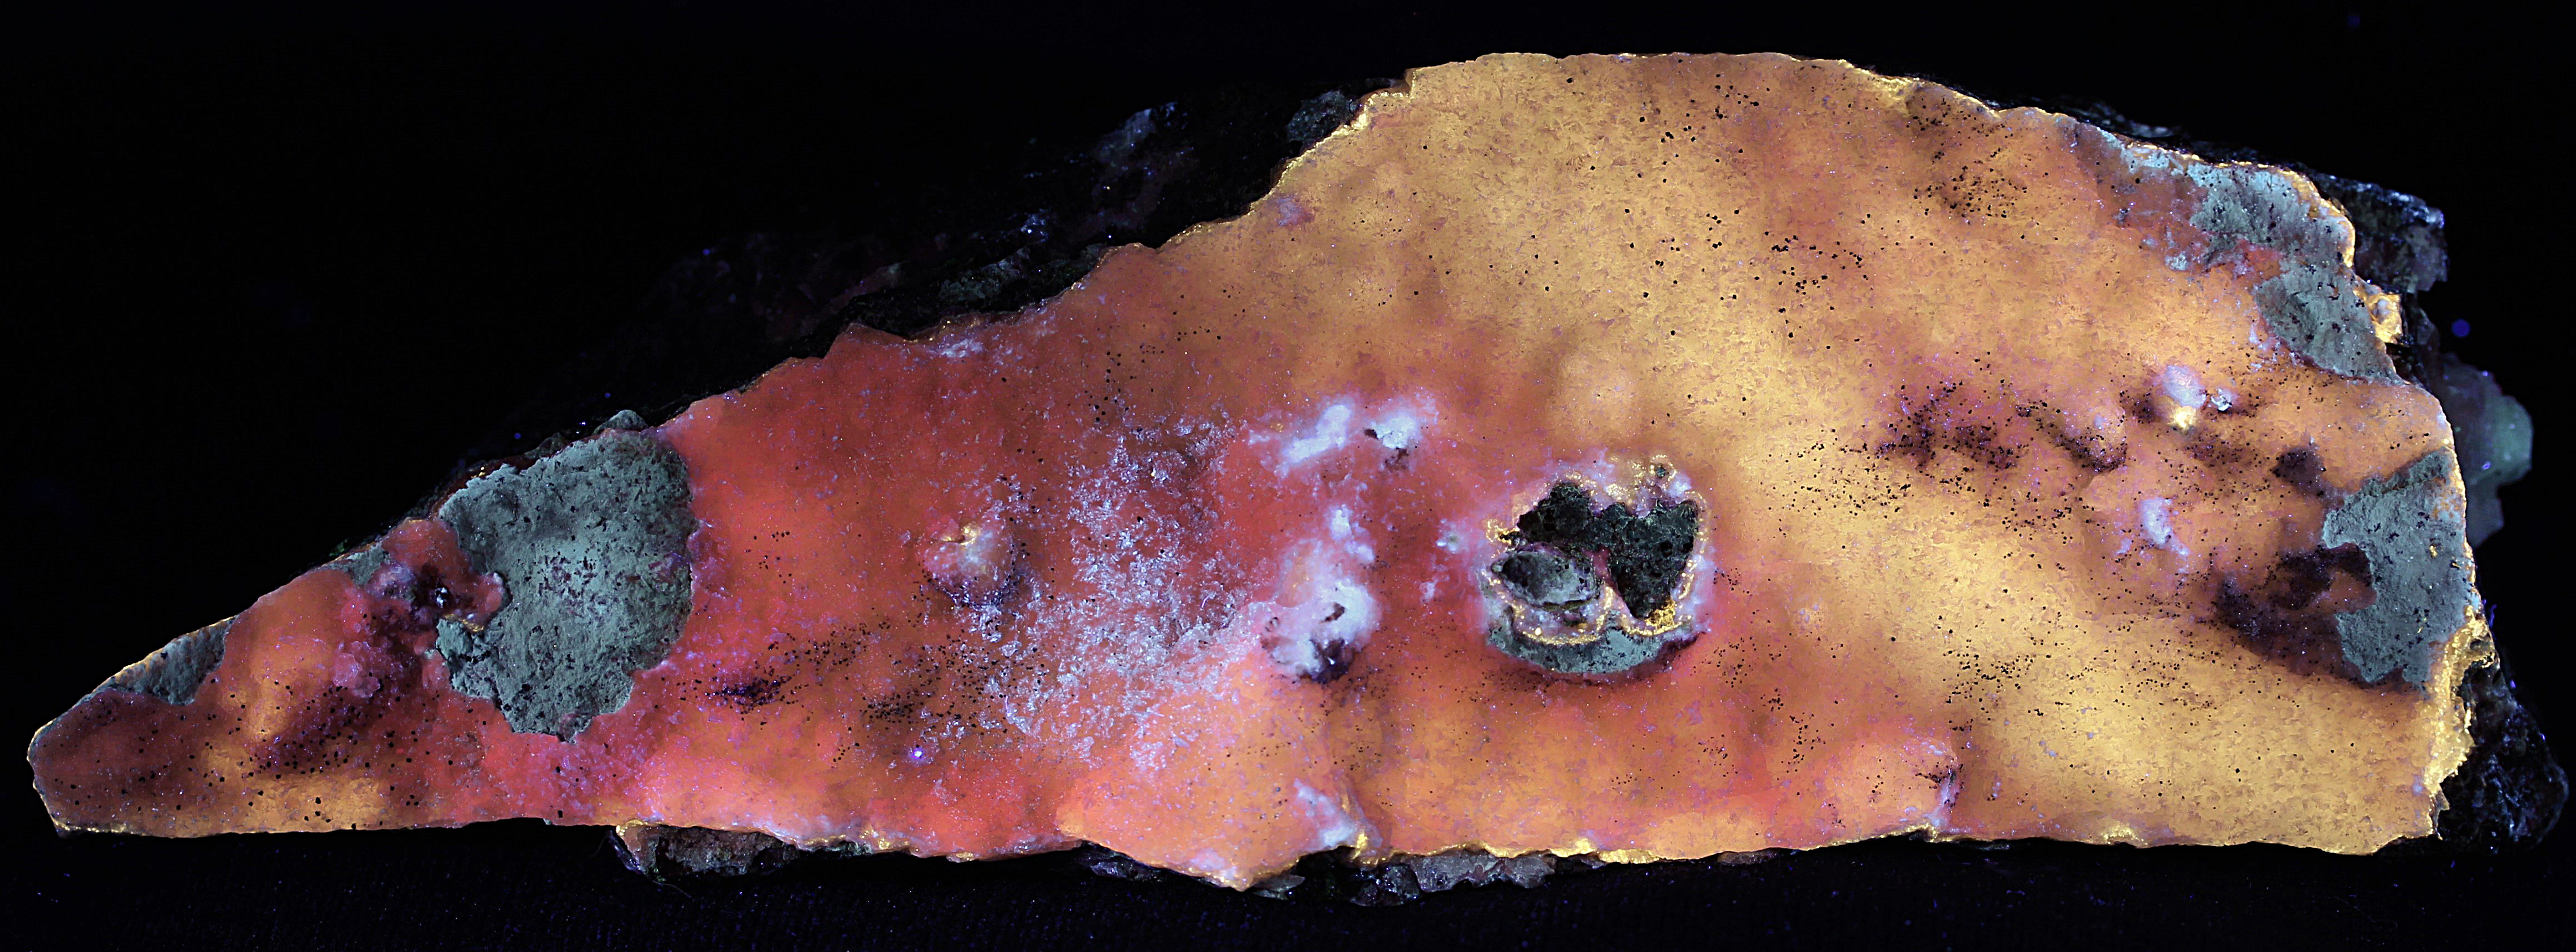 Calcite druze on franklinite and willemite from the Sterling Hill Mine, Ogdensburg, NJ under longwave UV Light